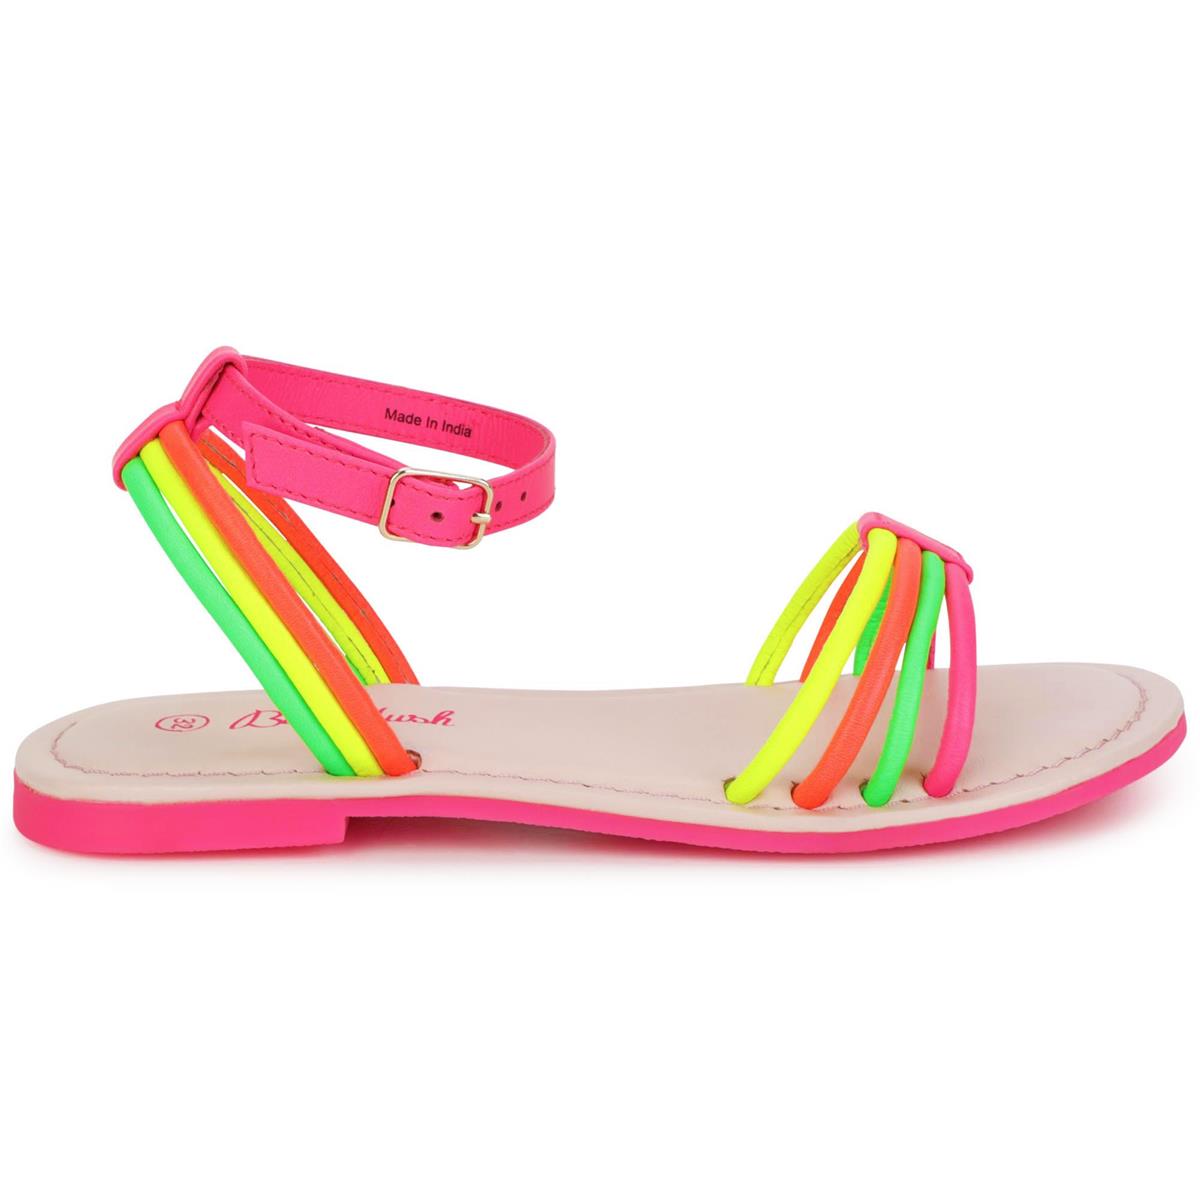 Girls Multicolor Sandals